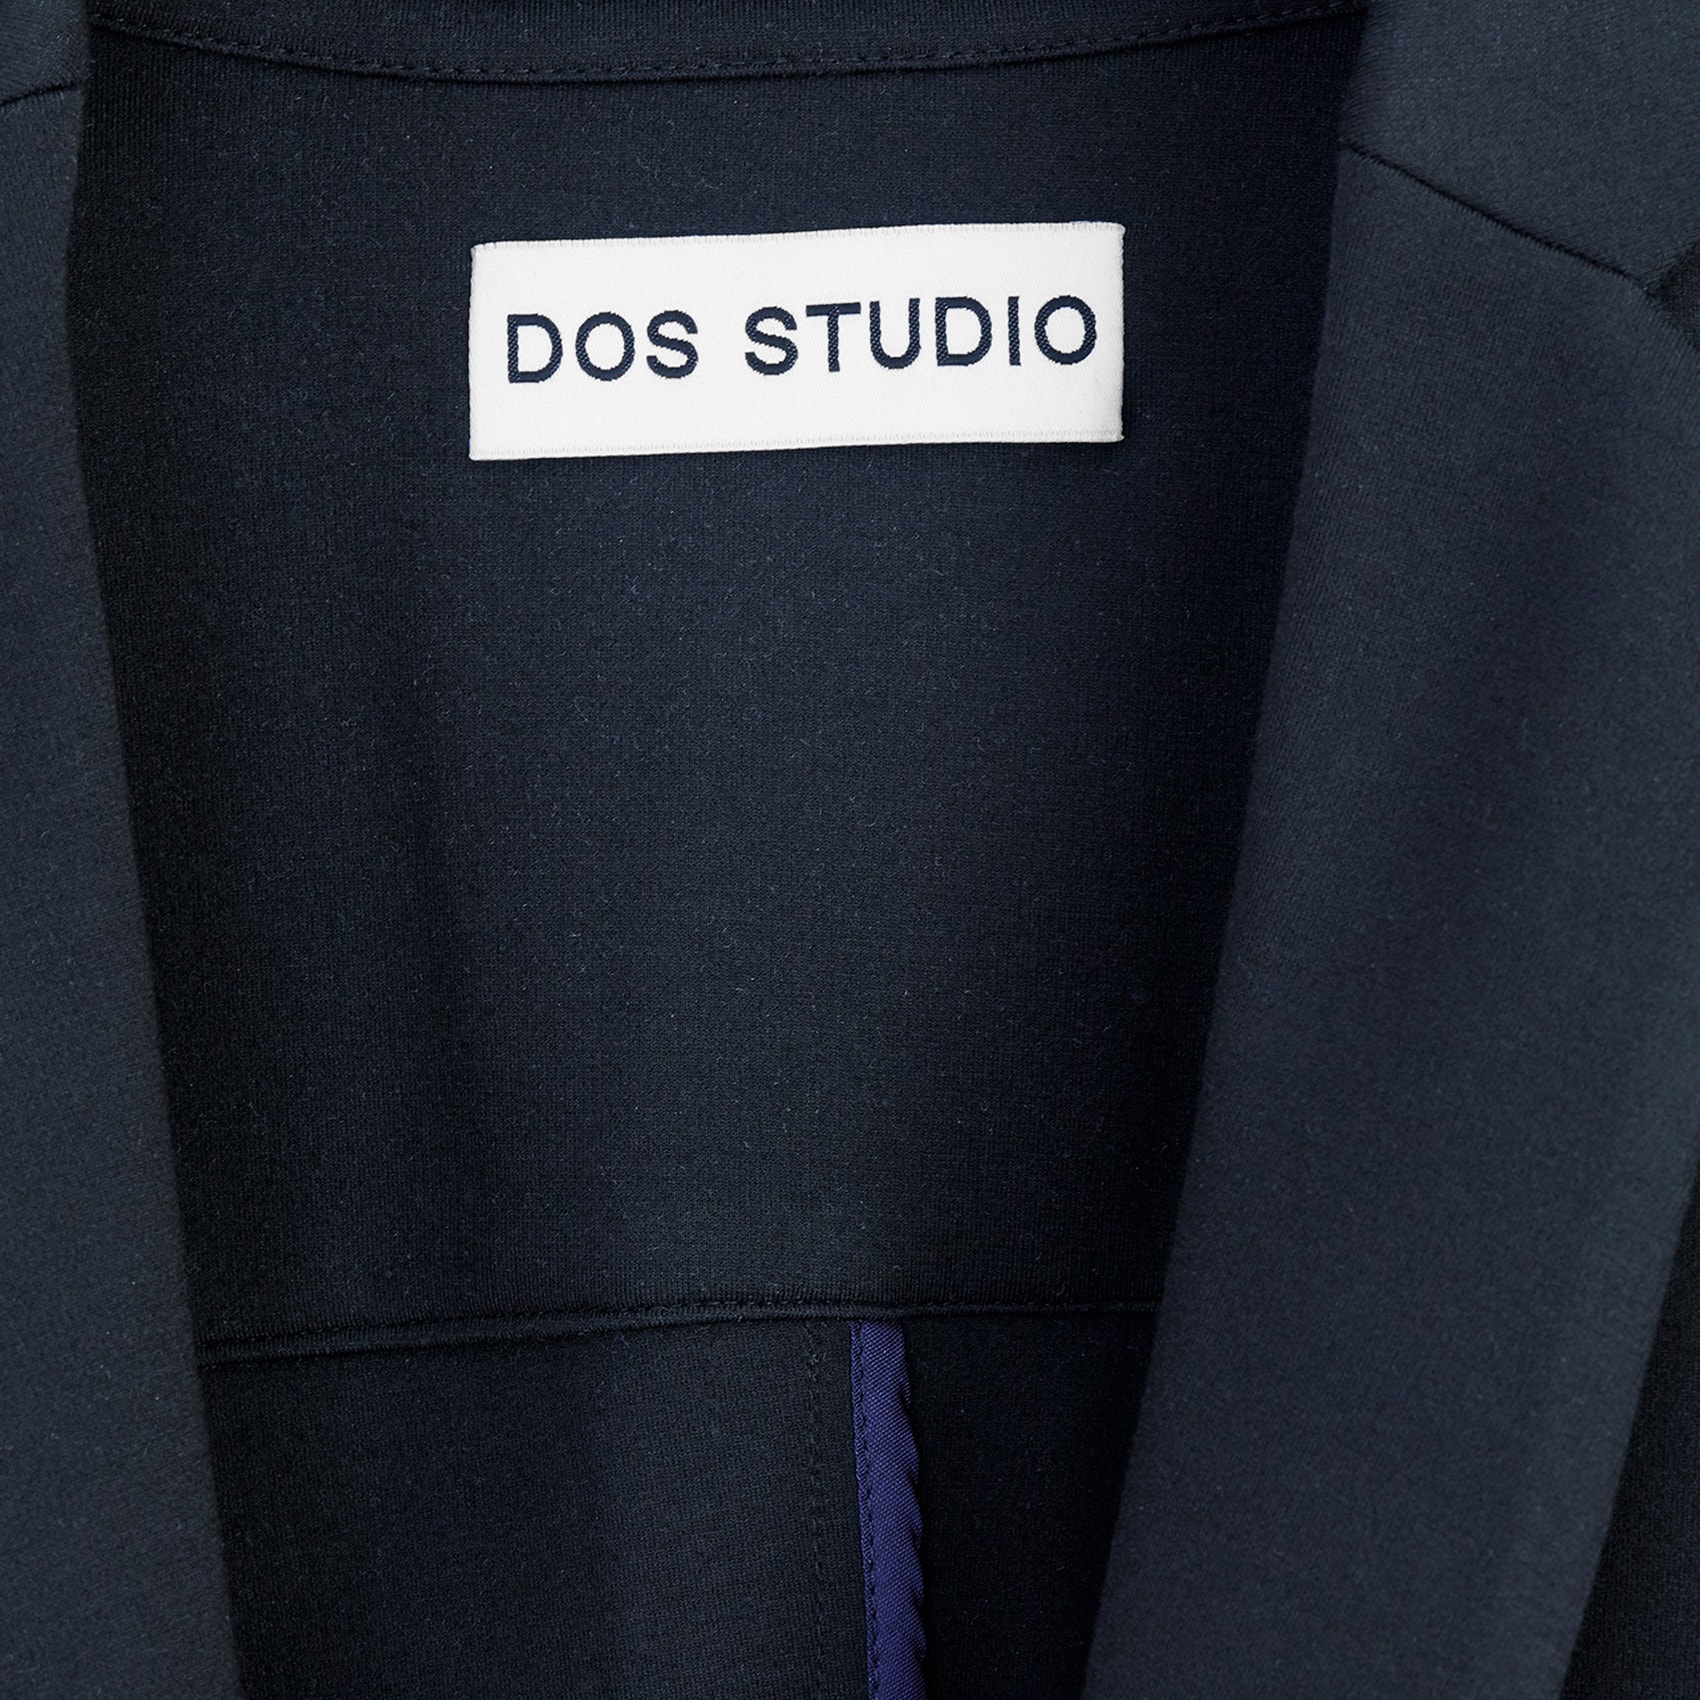 Dos Studio – Visual Journal